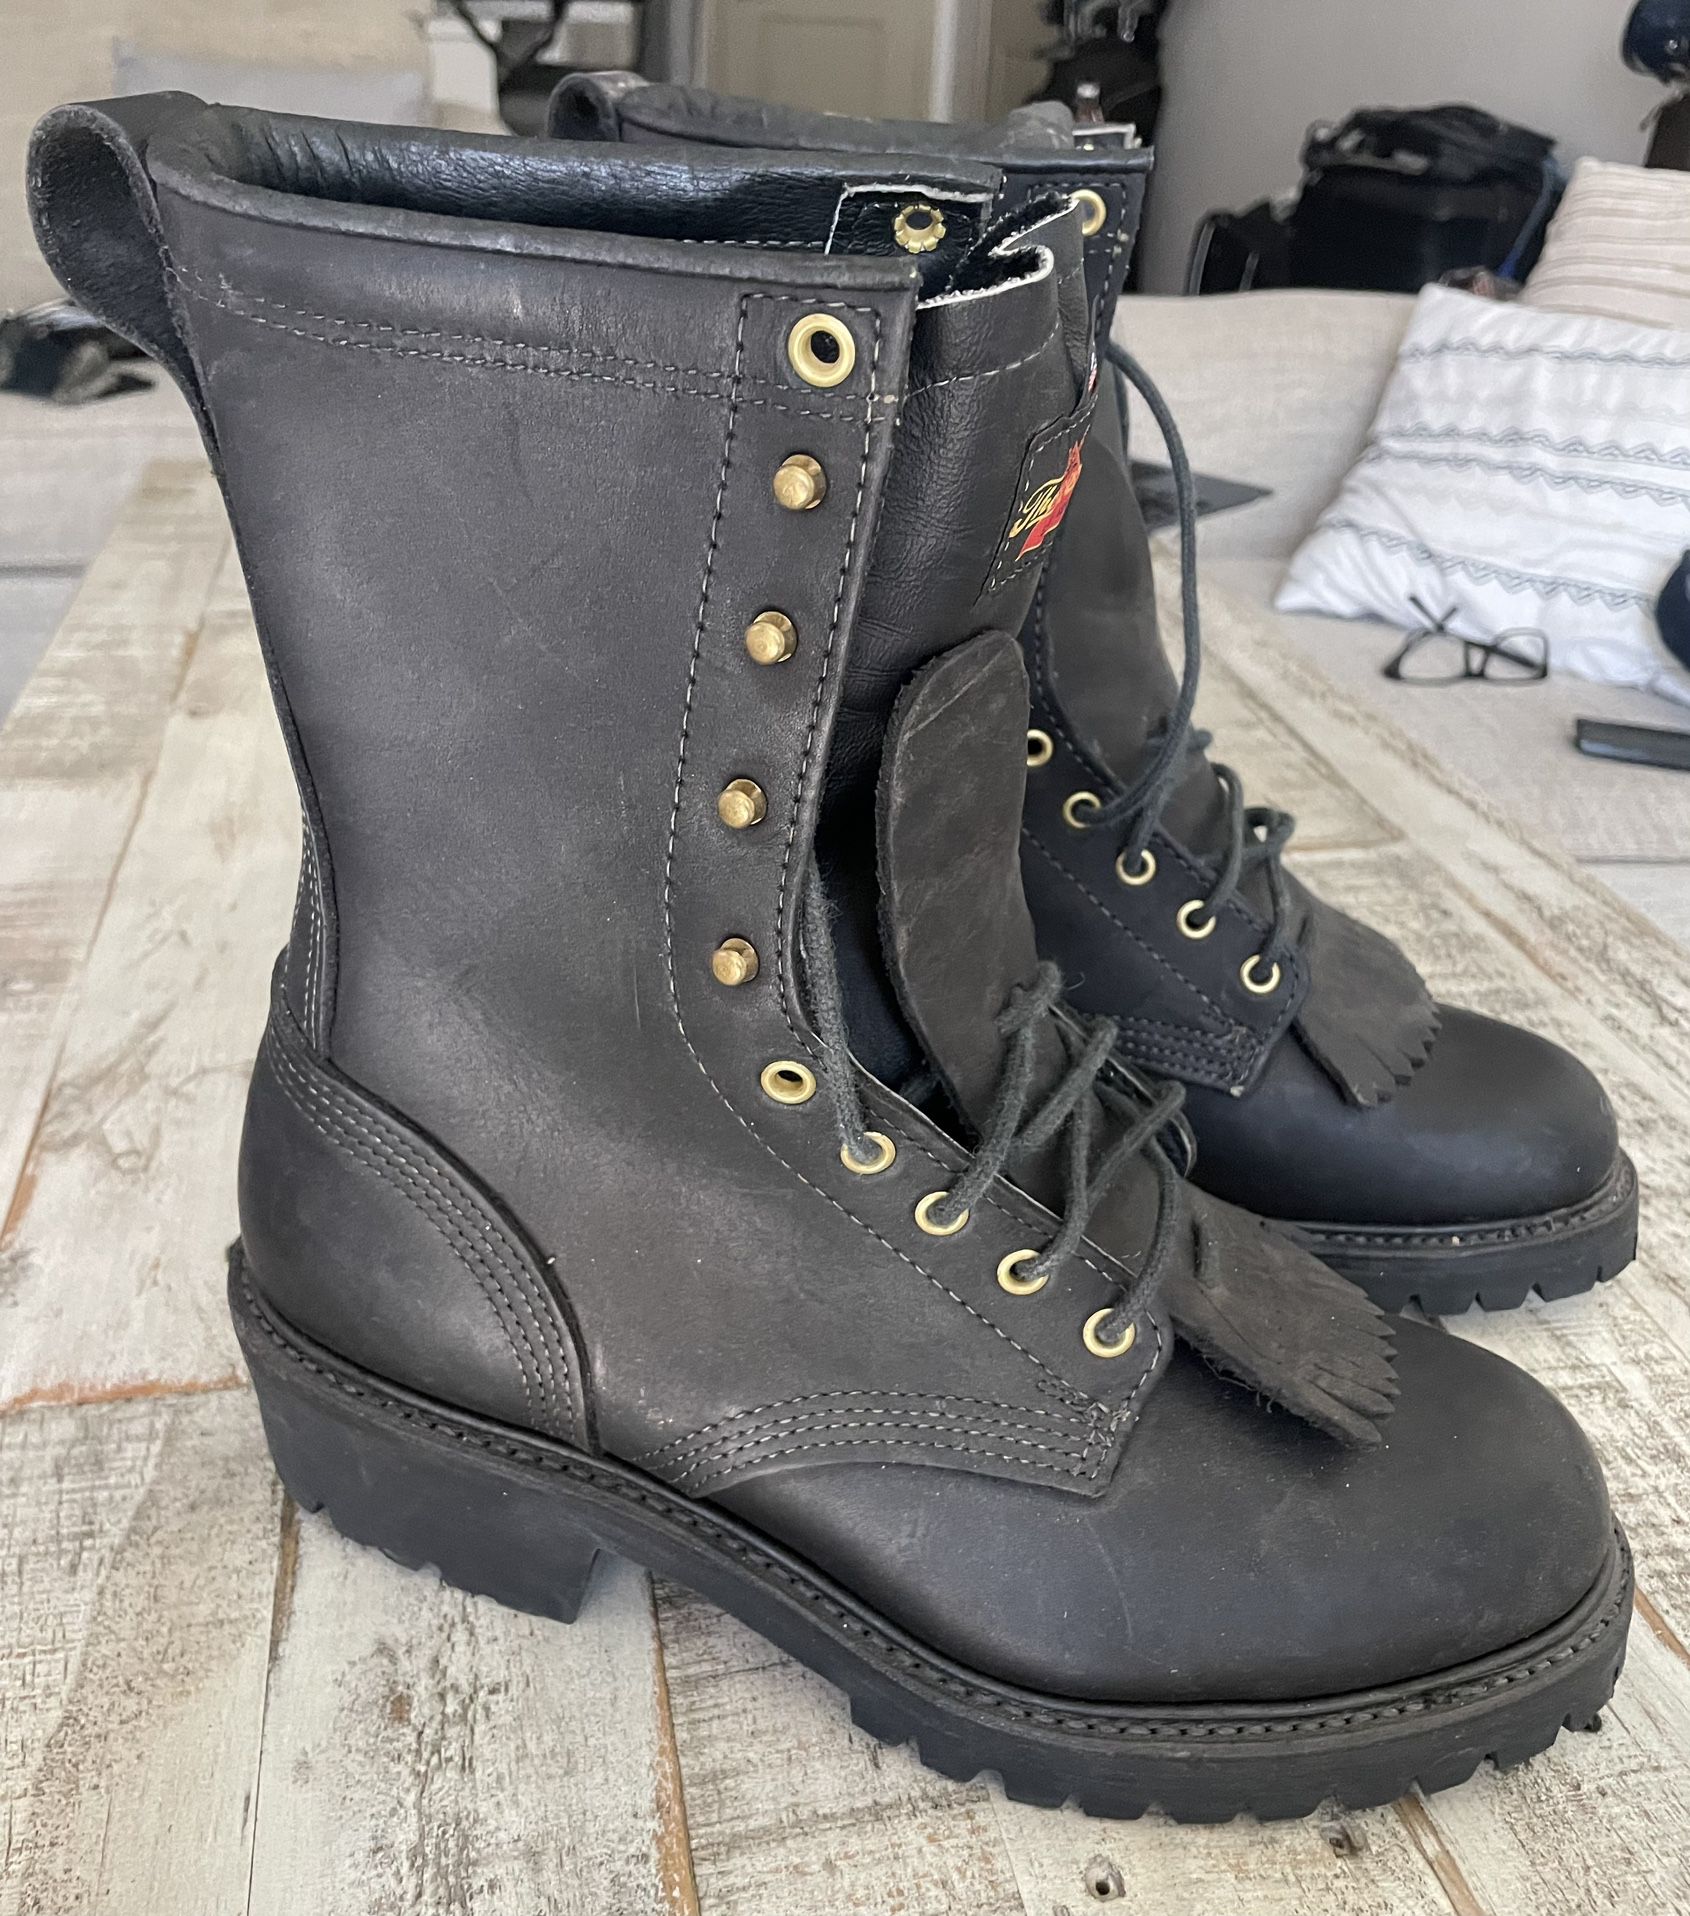 Thorogood Wildland/work boots 